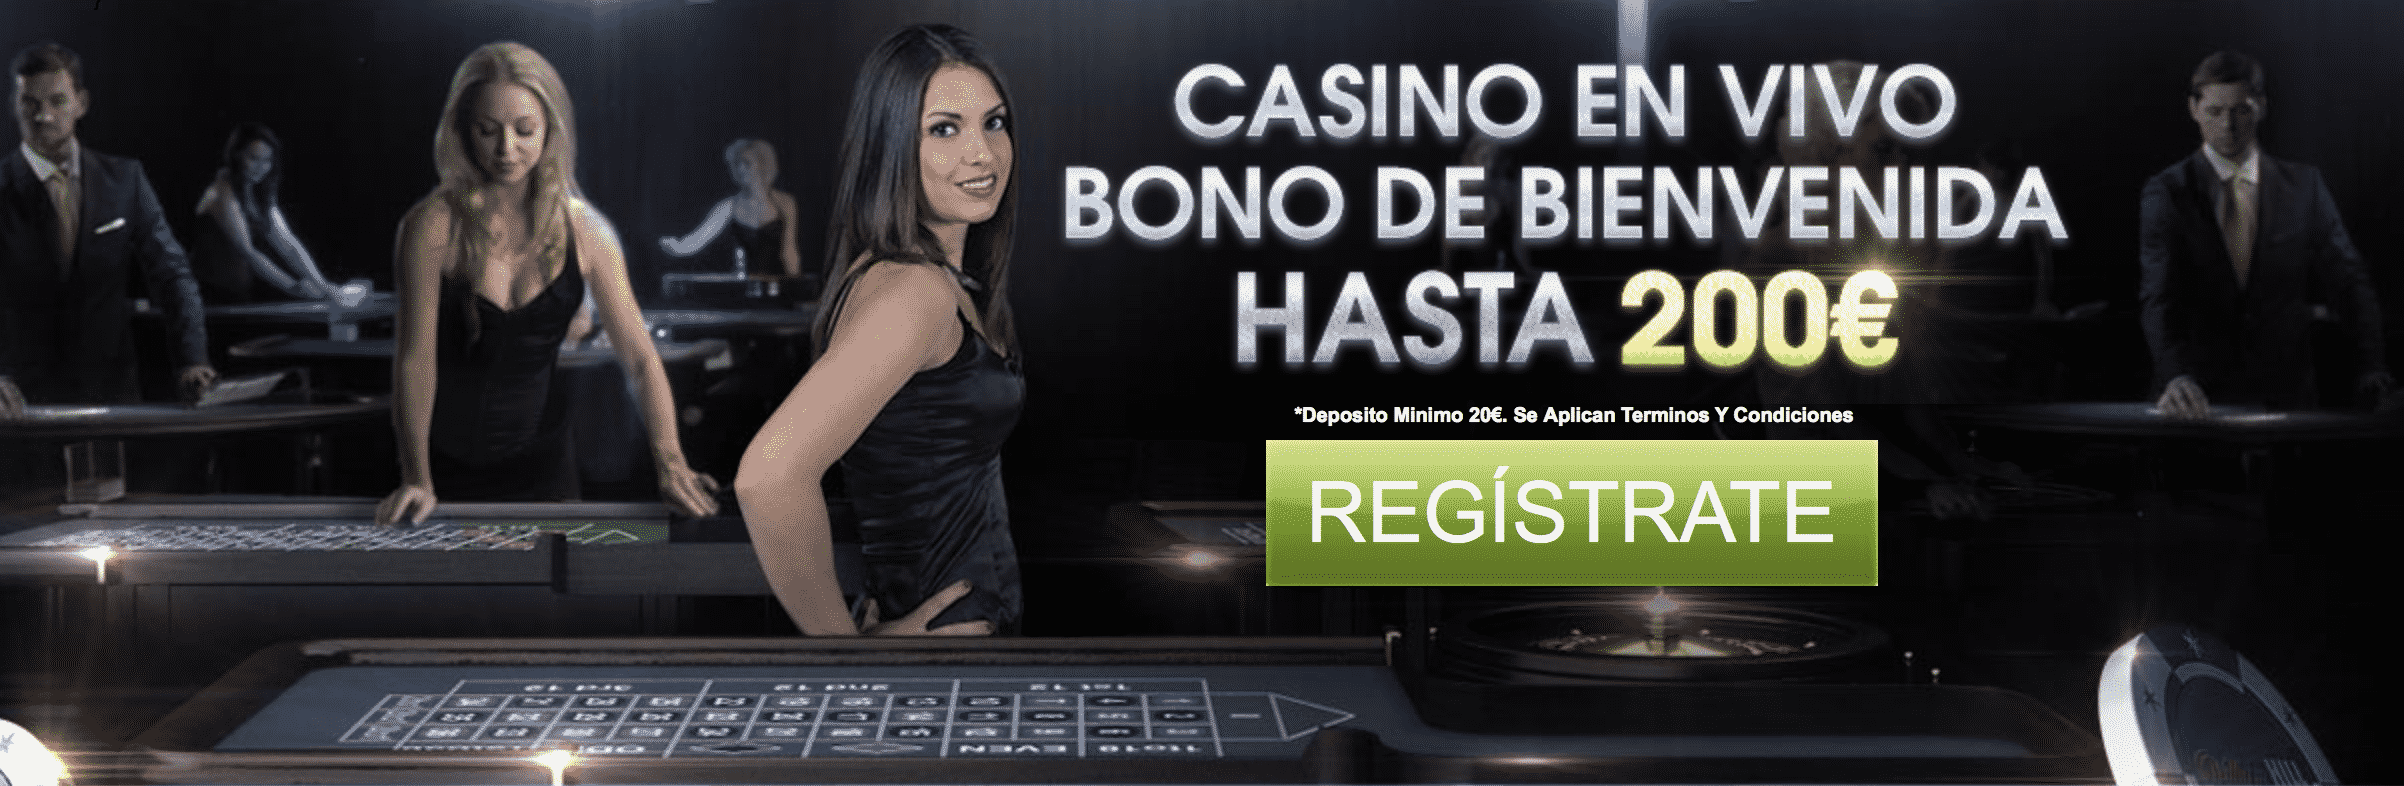 Pagos online casino william Hill Poker 630877